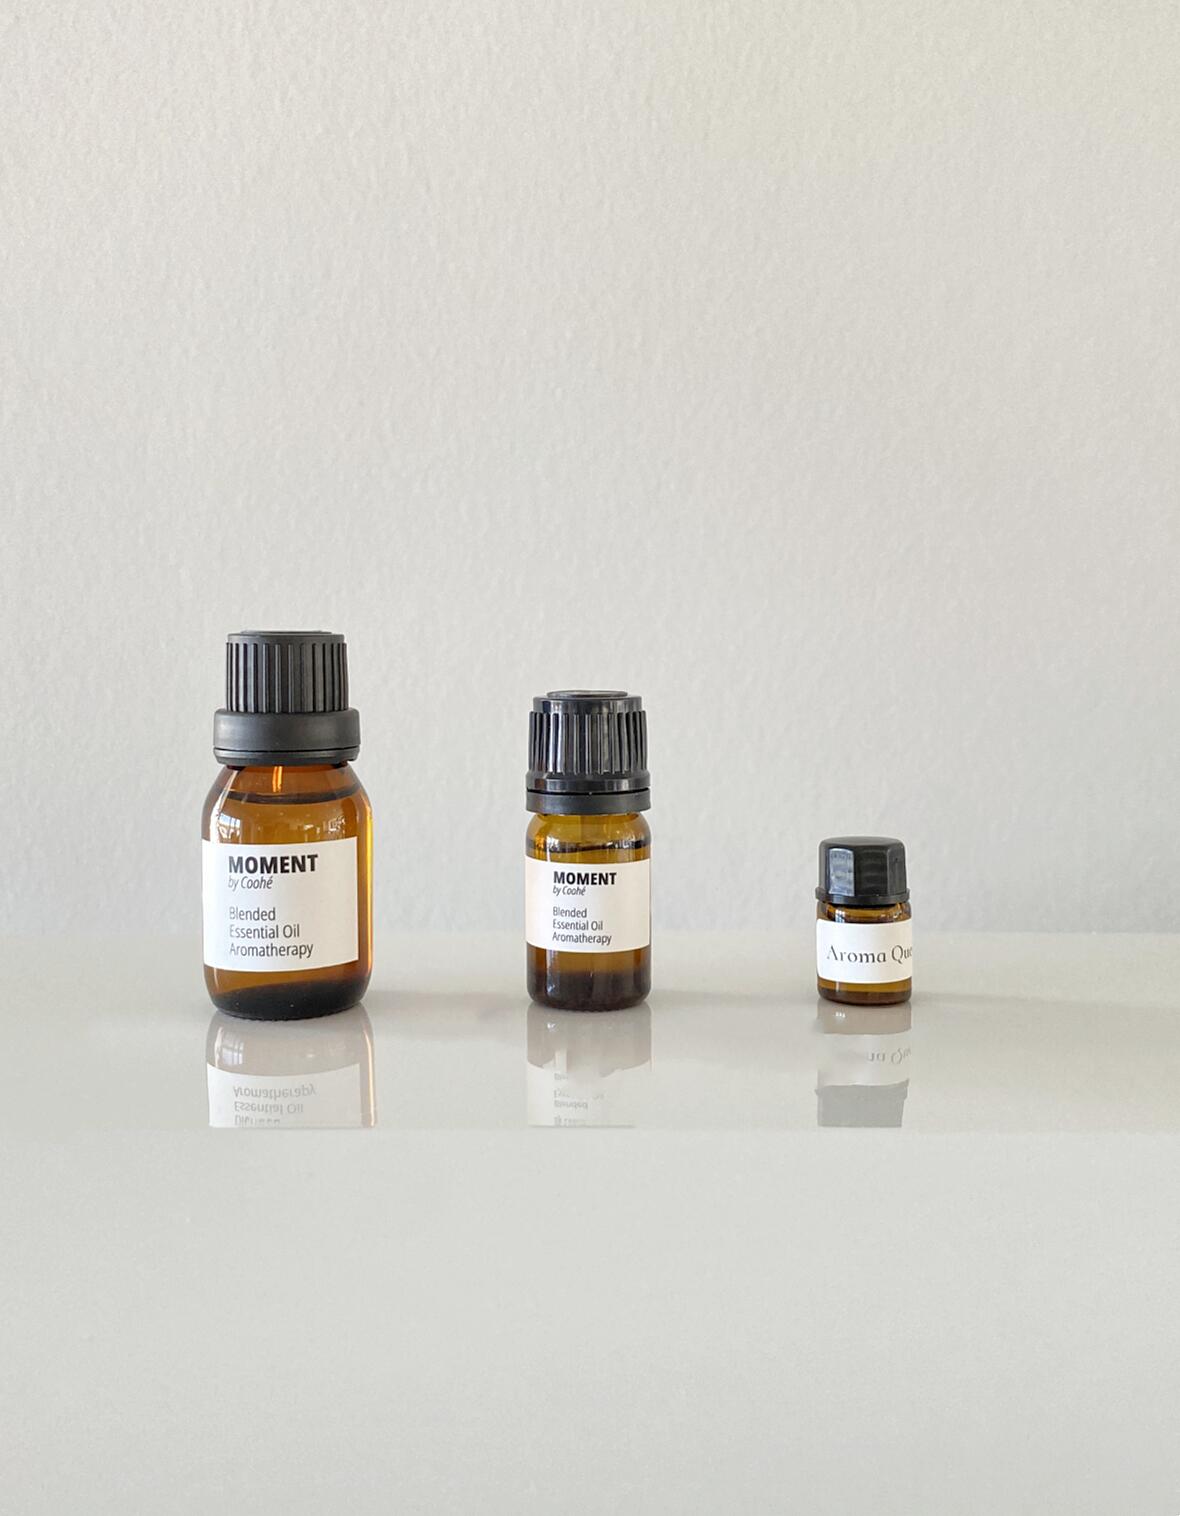 Oriental Beauty Aromatherap Essential Oil